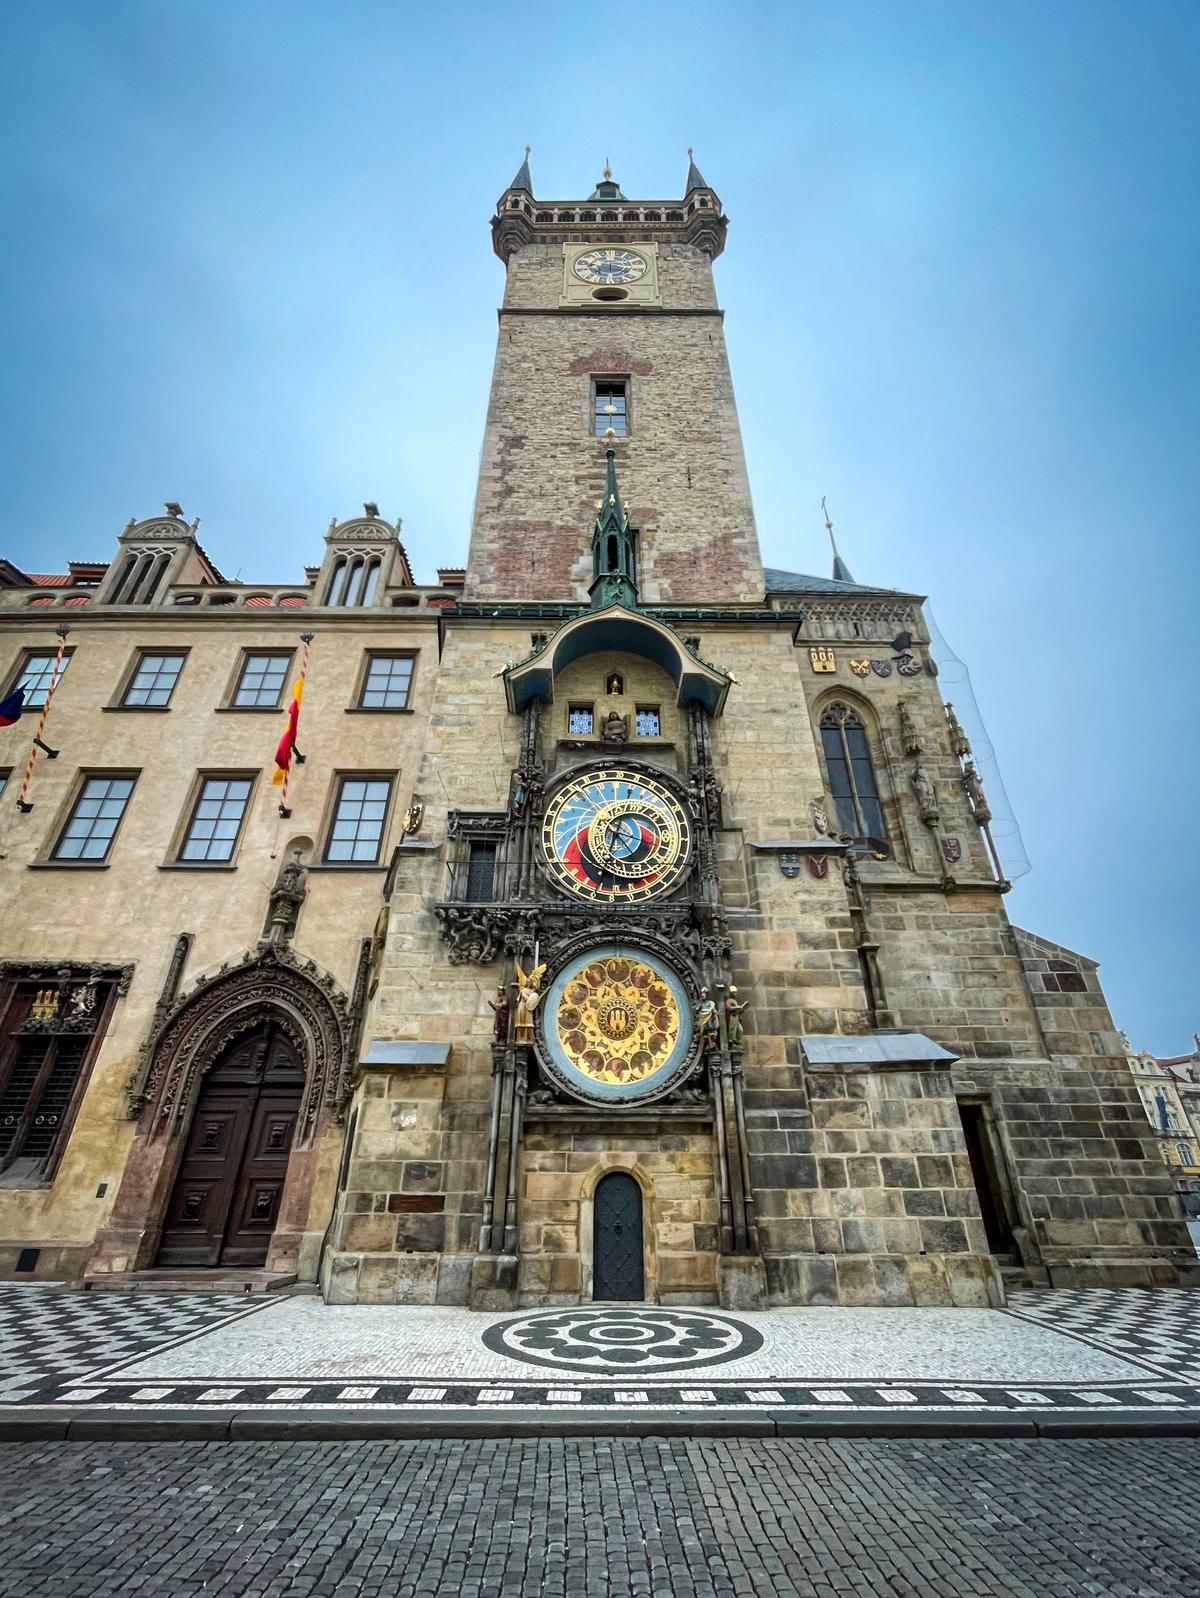 Prague's astronomical clock, mounted on the south wall of Town Hall. (<a href="https://unsplash.com/photos/abJXt7t6b58">Alexandra Tran</a>/Unsplash)